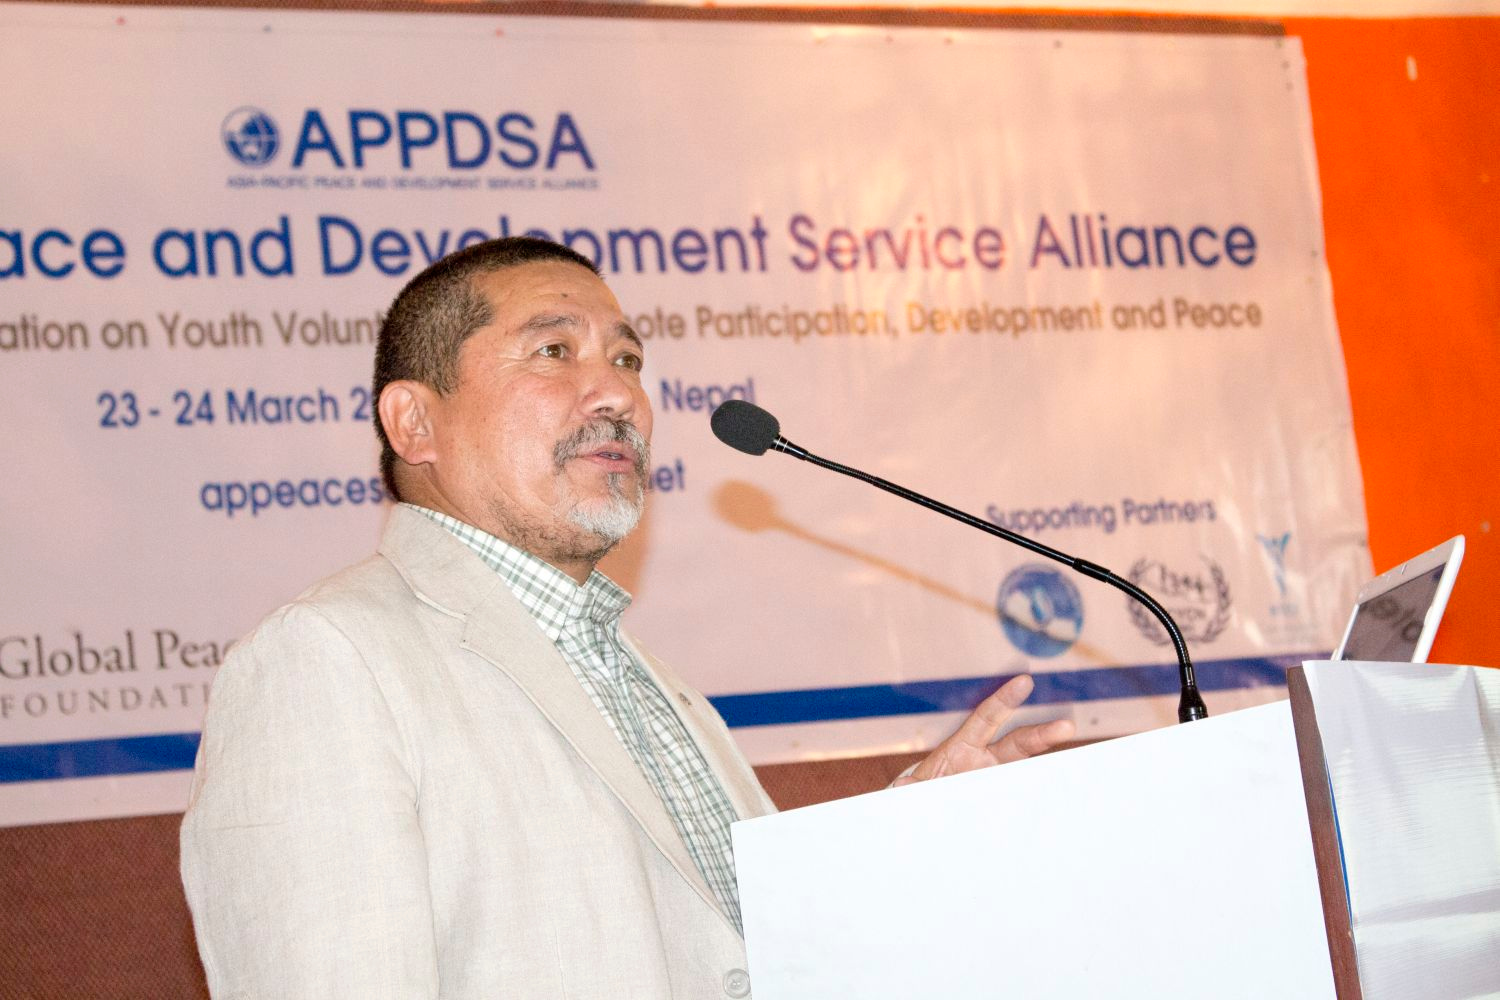 Mr. Megh Ale at APPDSA 2015 event